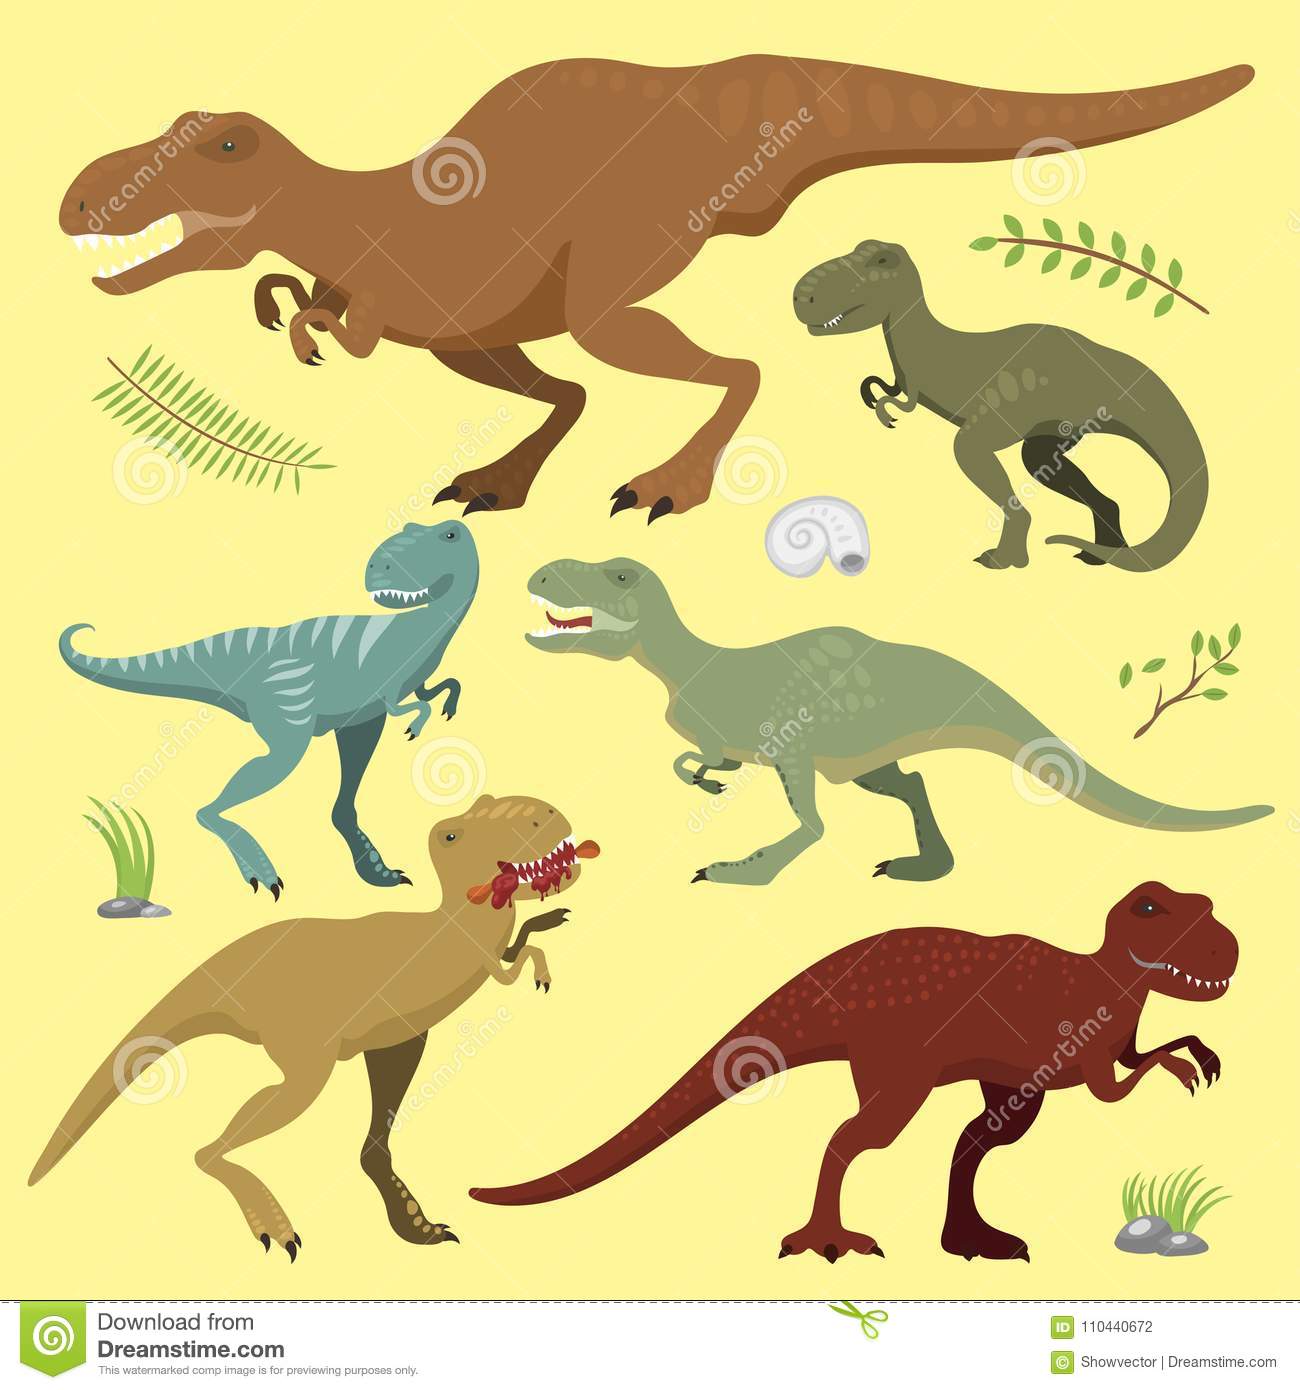 Les dinosaures du jurassique